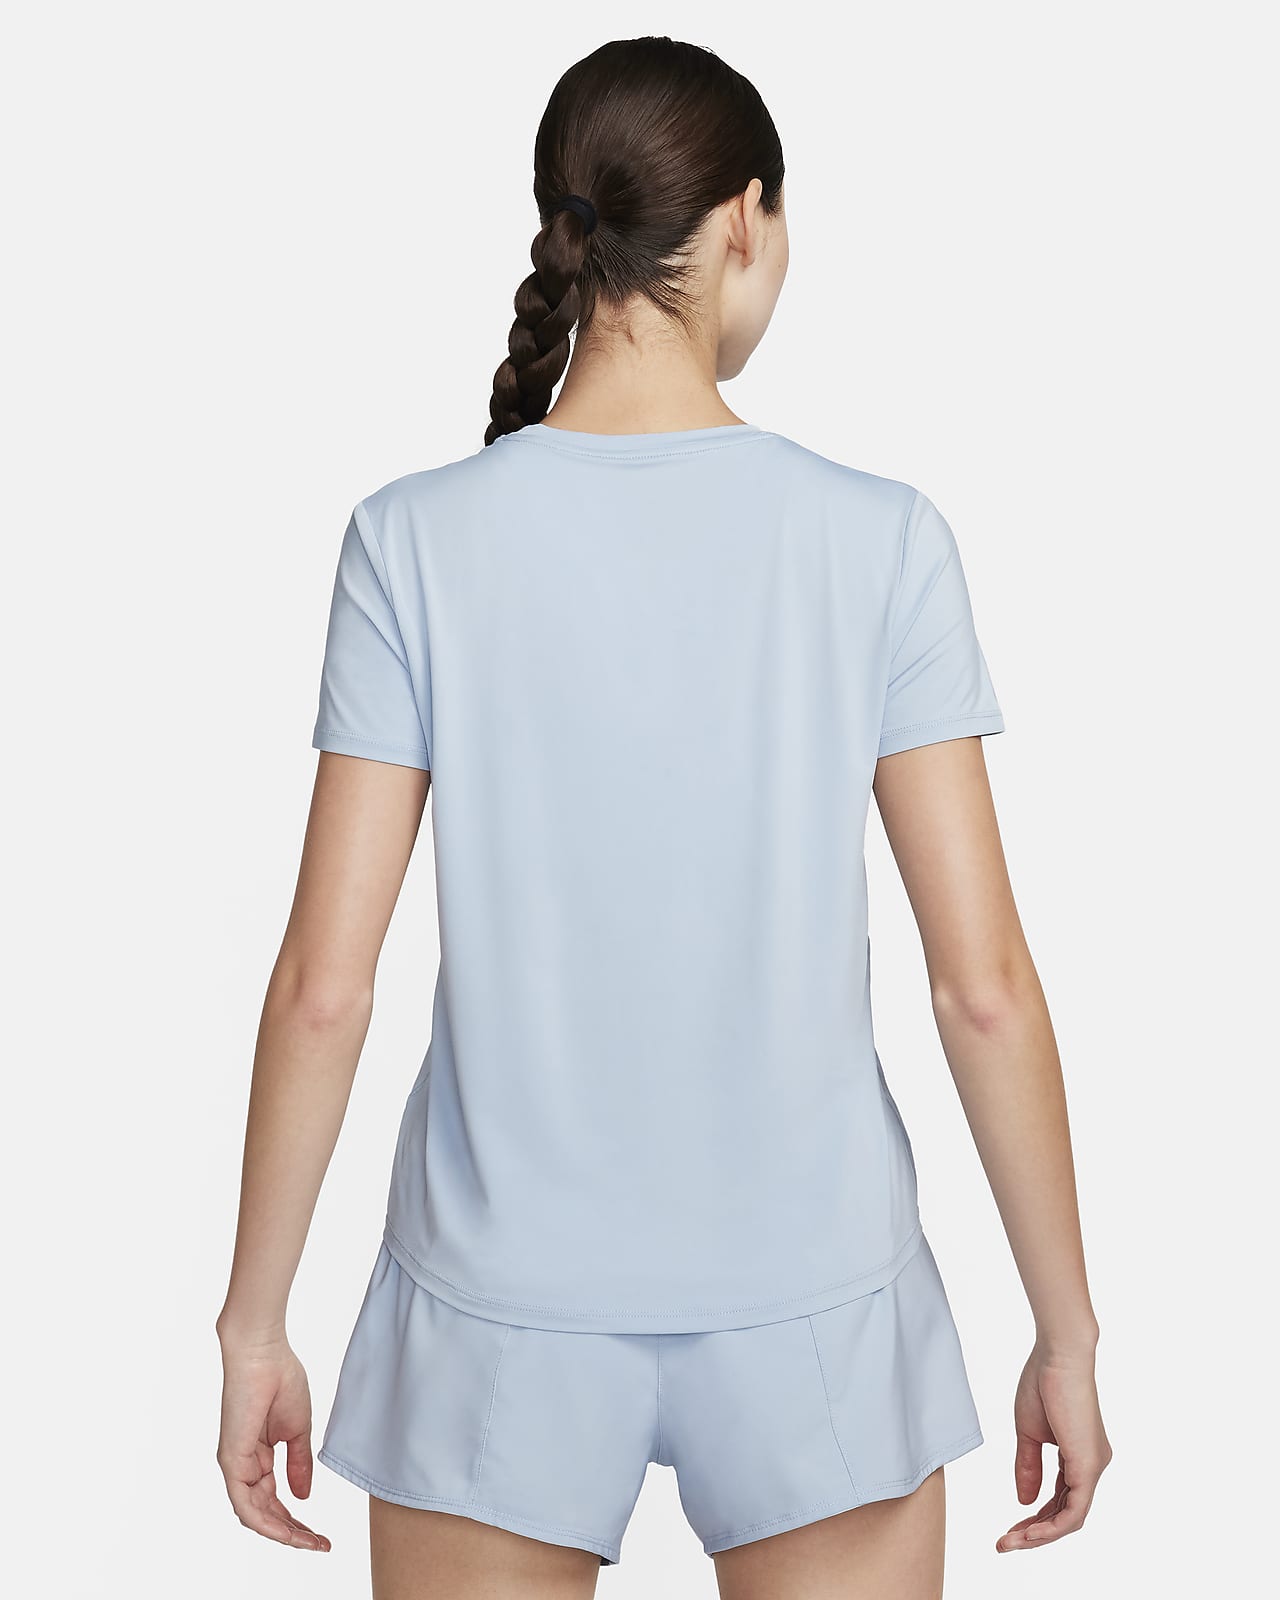 Nike Dri-Fit One Standard Fit Short-Sleeve Top Women - white/black